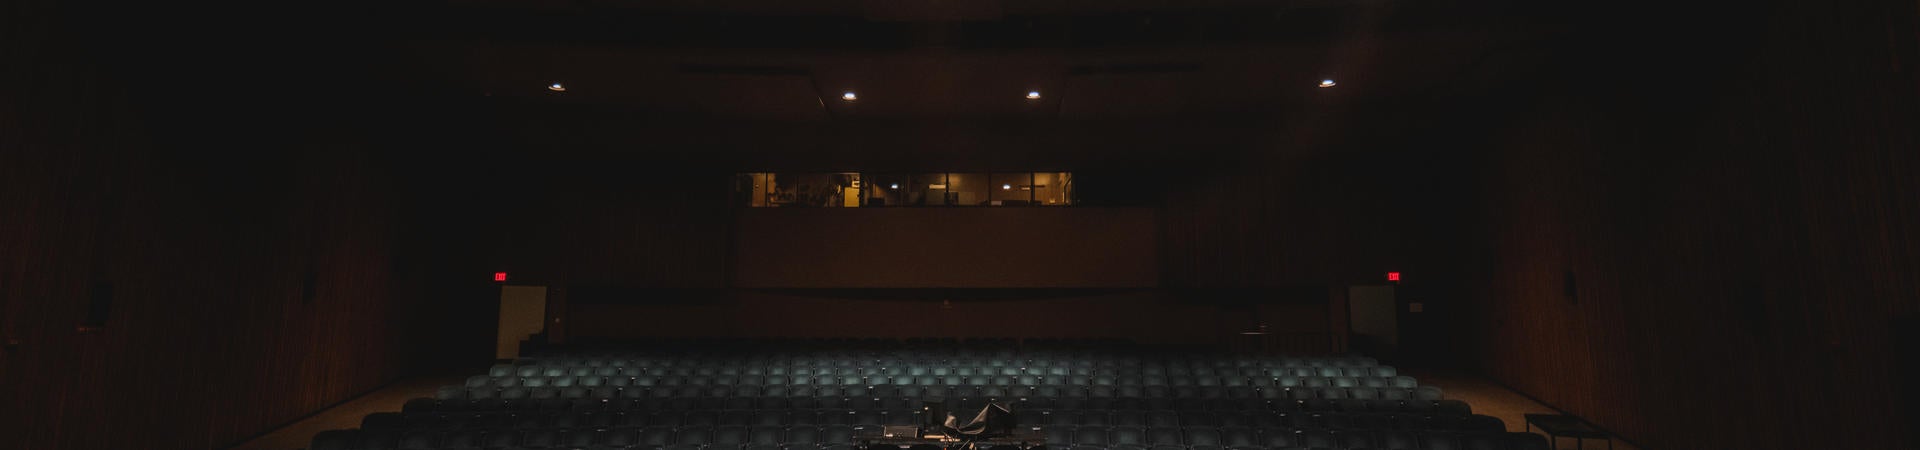 University Theatre Interior